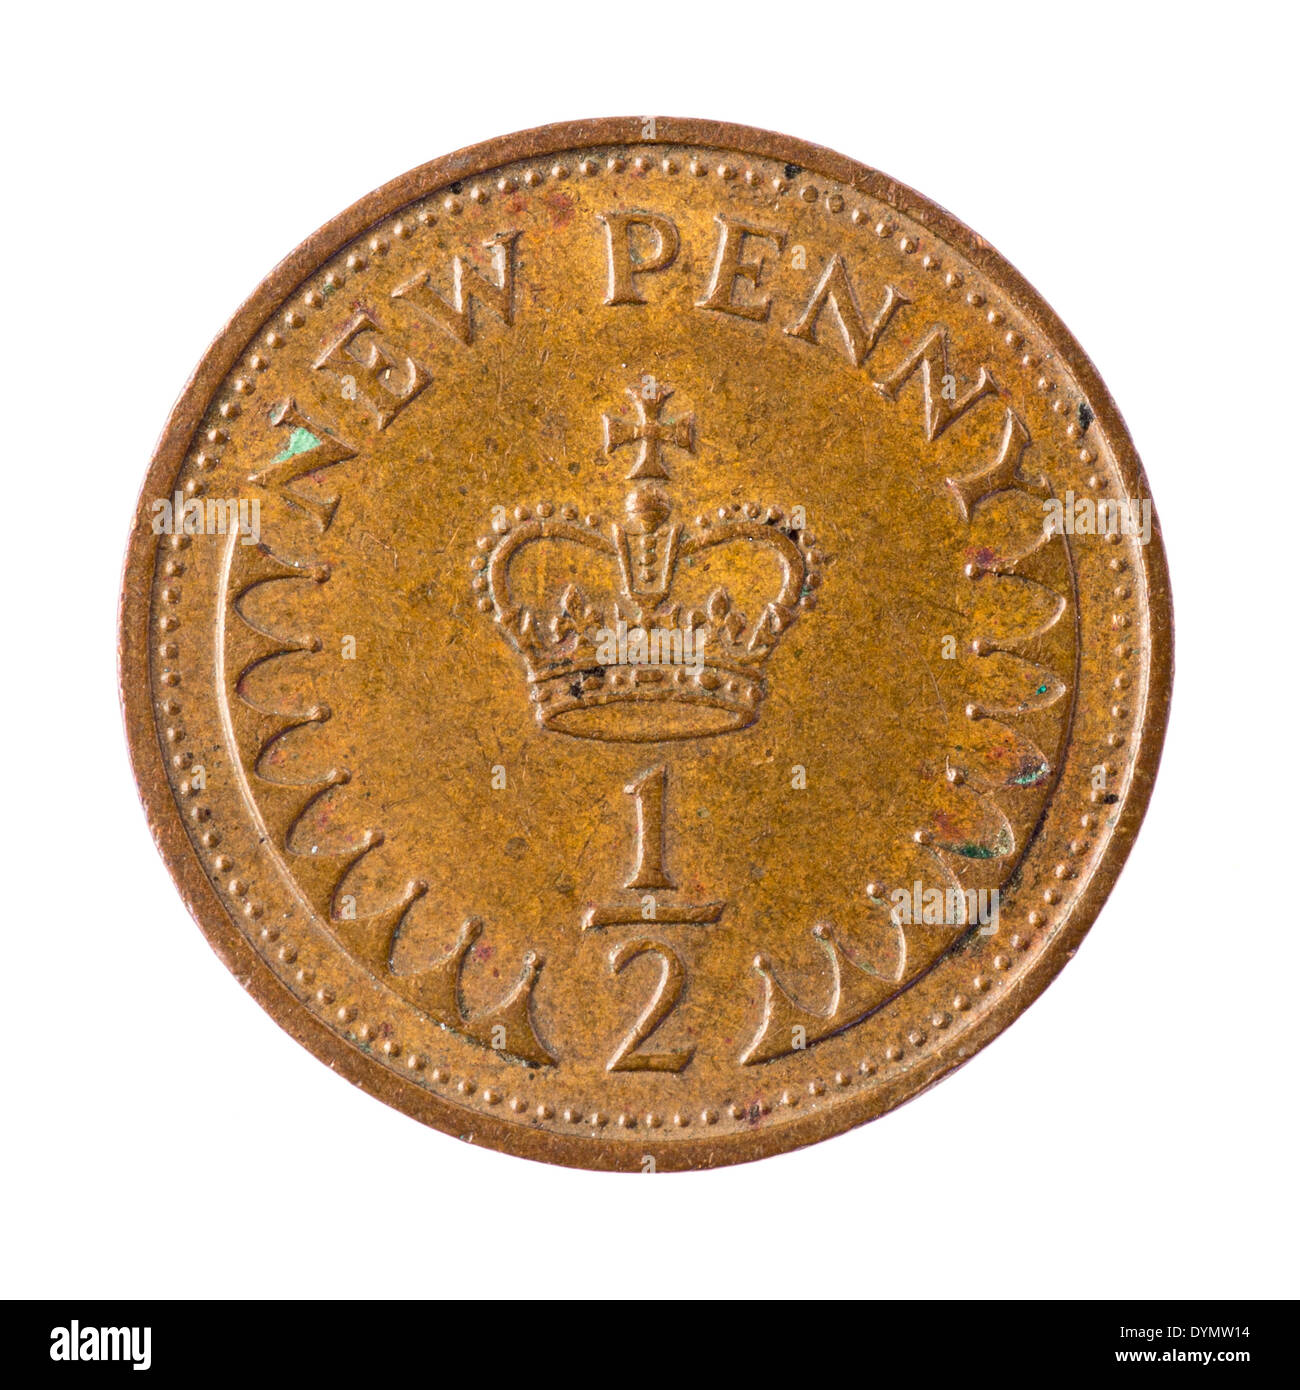 British decimal half new penny coin 1971 Stock Photo